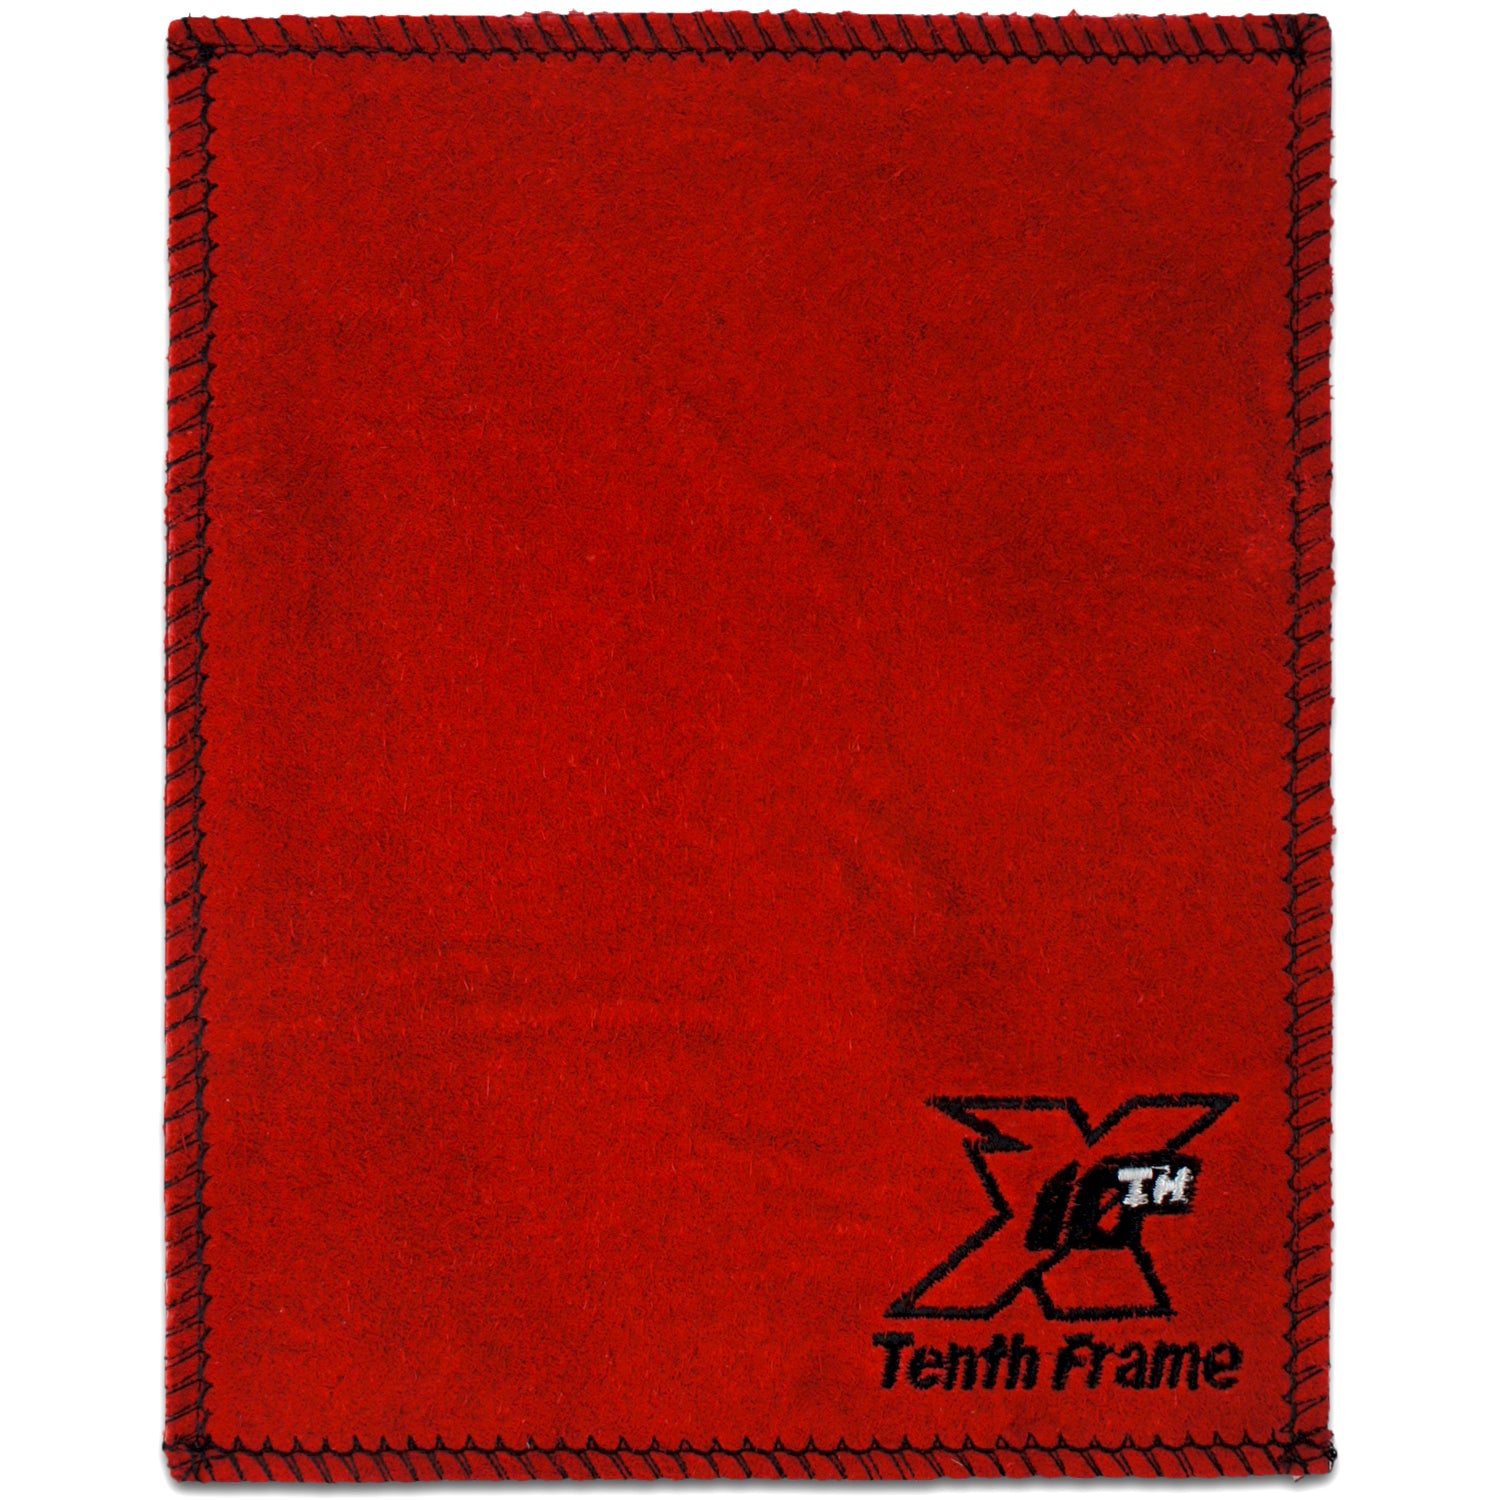 Tenth Frame Shammy Pad - Leather Bowling Ball Shammy (Red)